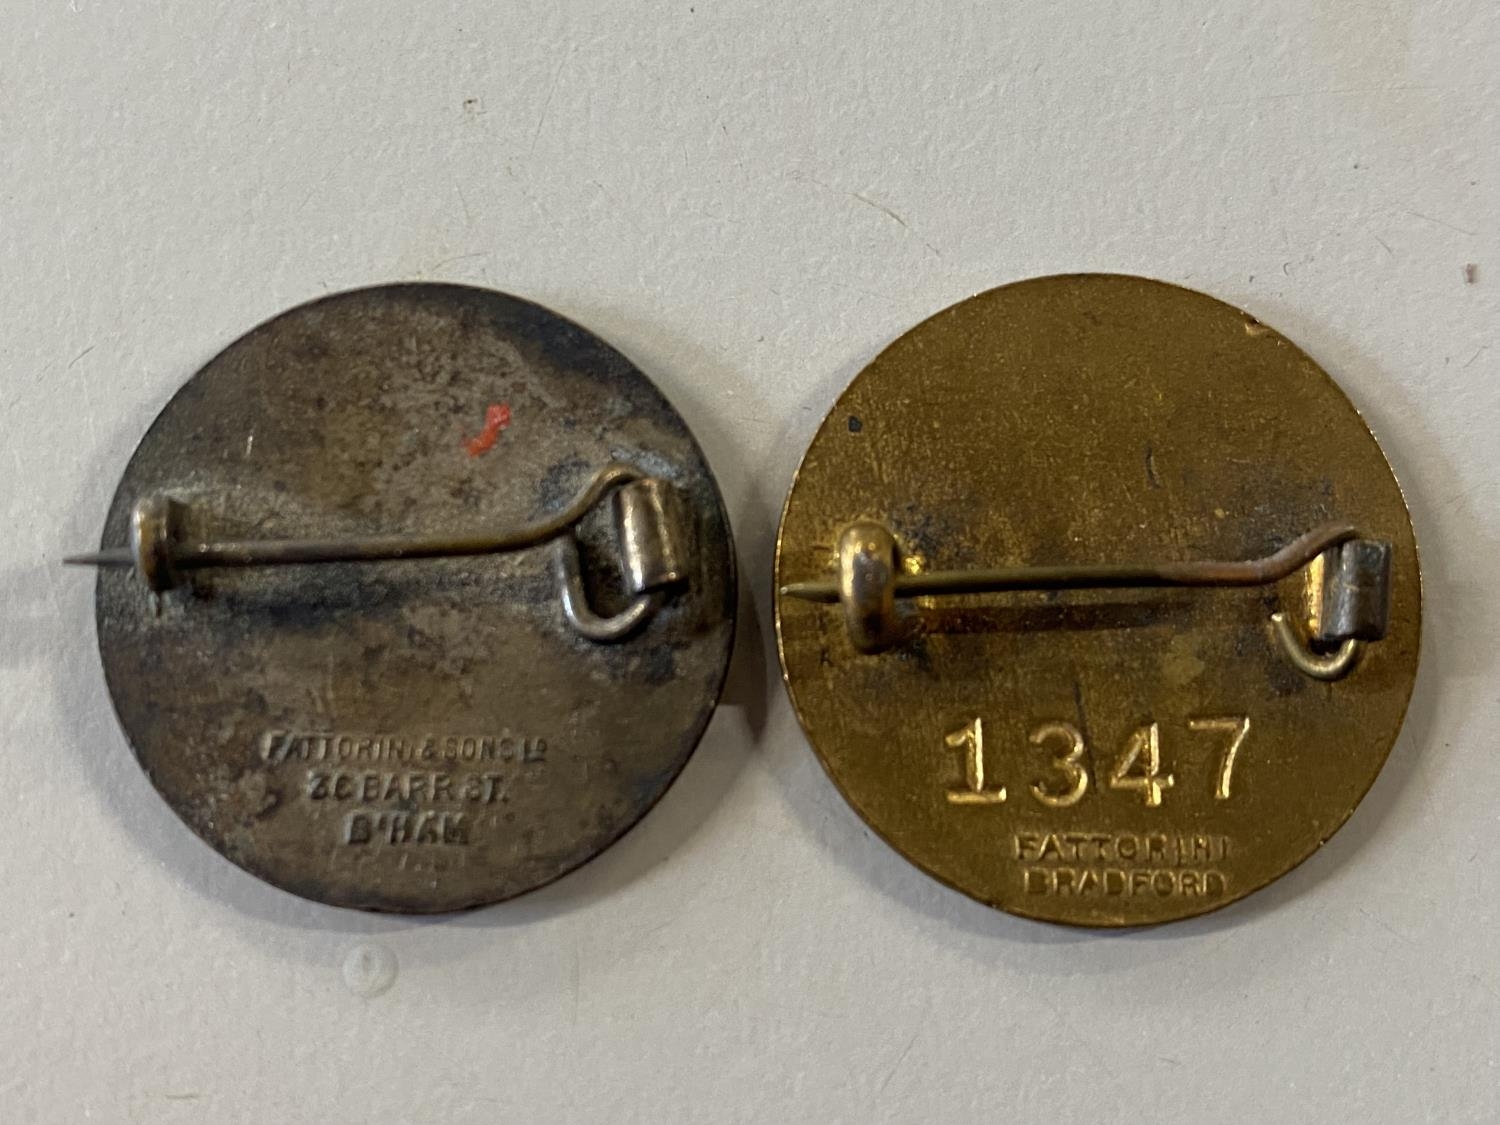 Two vintage enamel badges, a rare factory pin badge for Blackburn Aircraft Ltd and British - Image 2 of 2